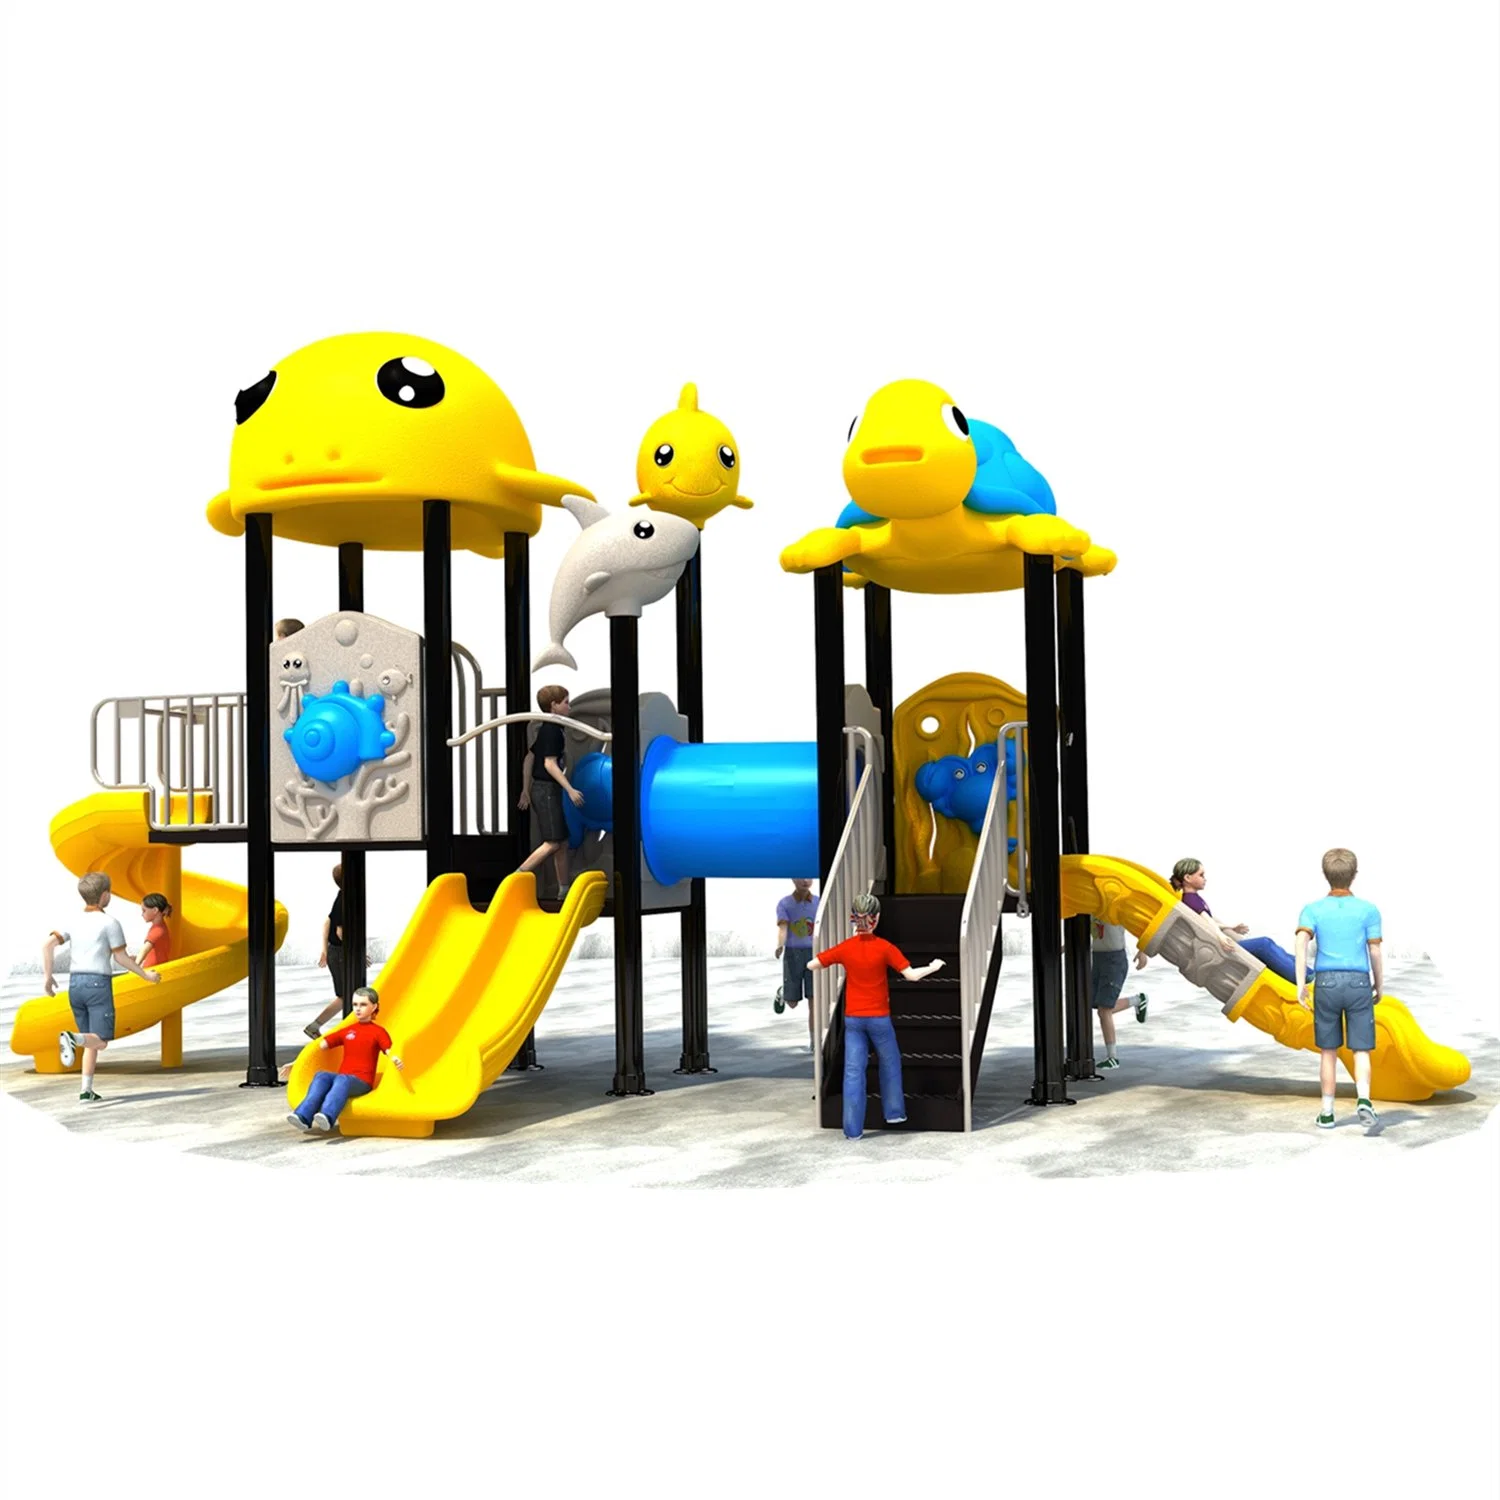 Customized Community Large Slide Equipment Outdoor Children's Playground New Style